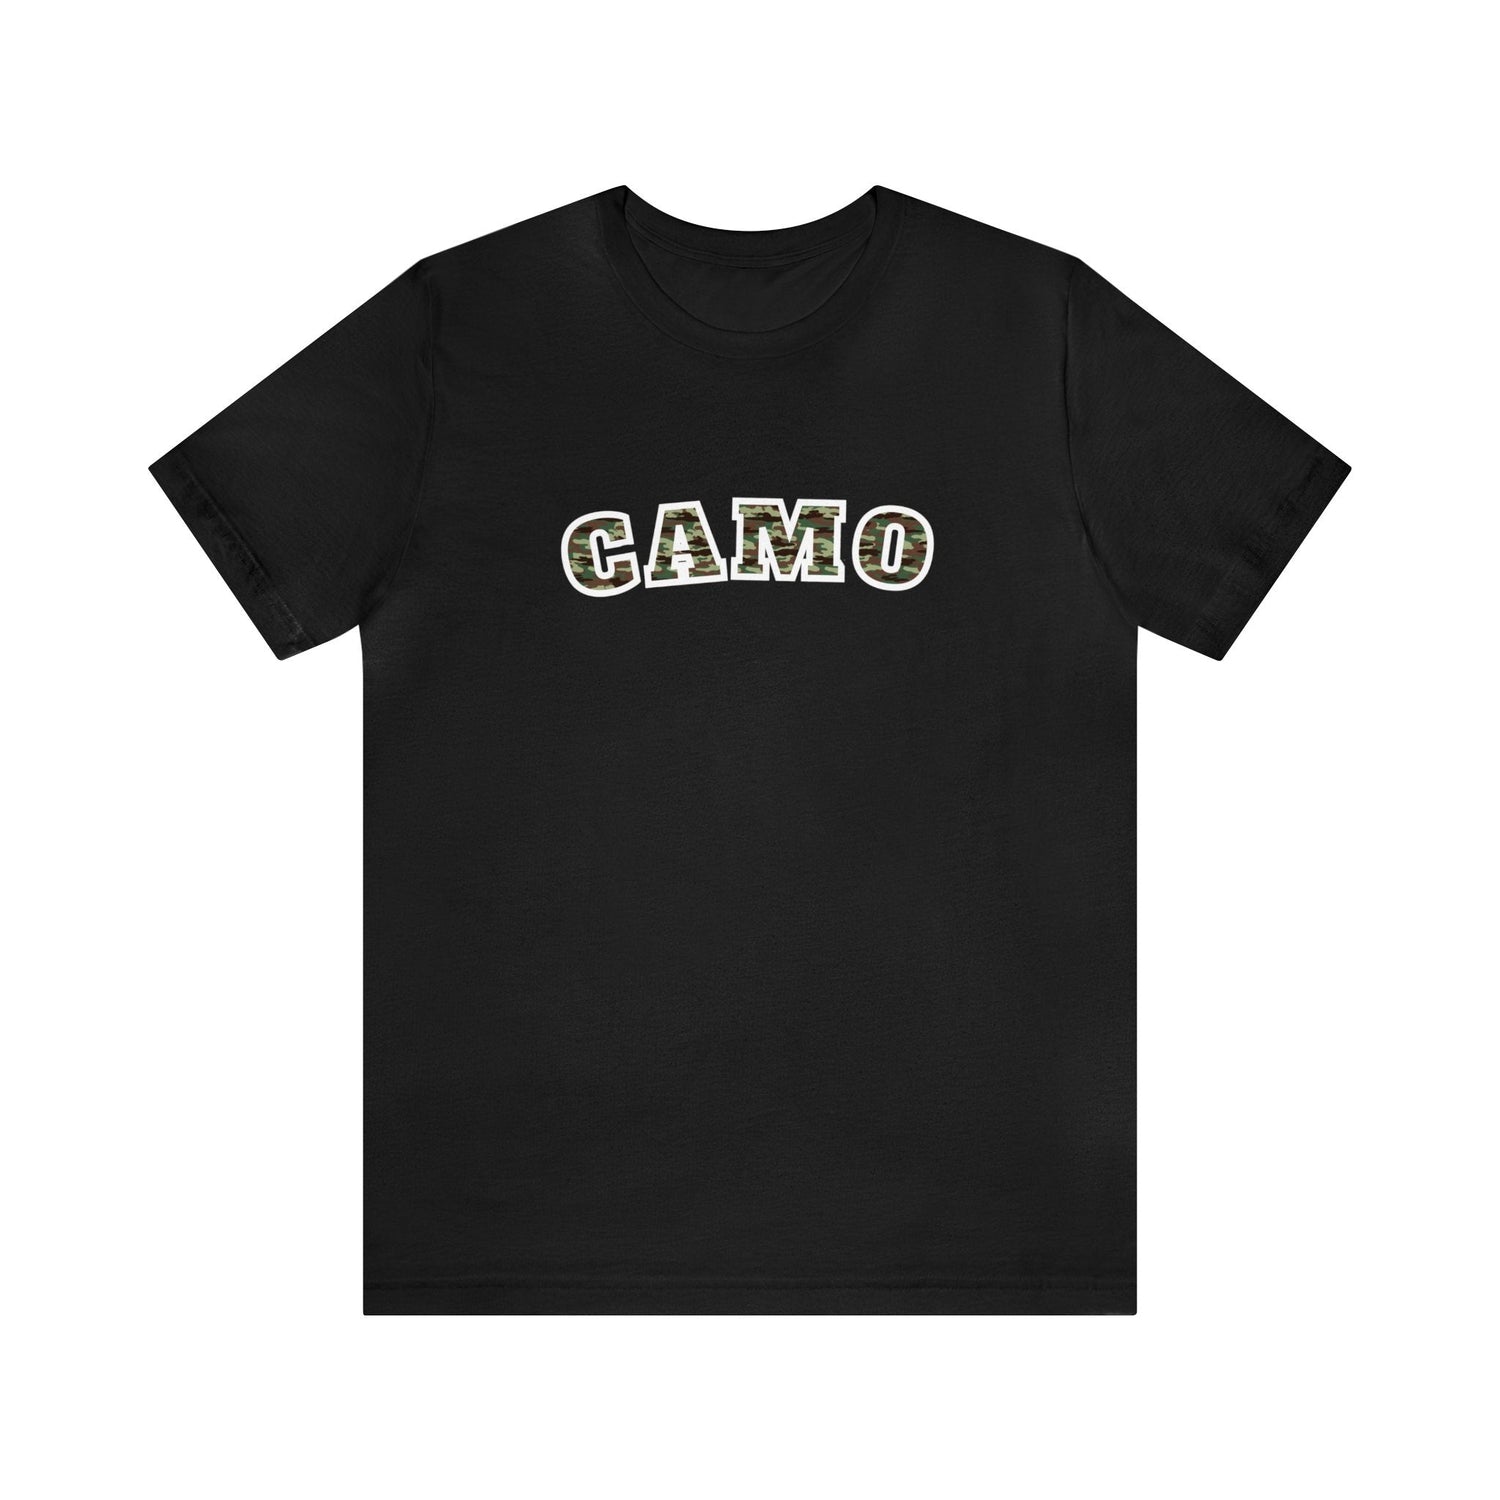 Western deer hunting t-shirt, color black, front design placement